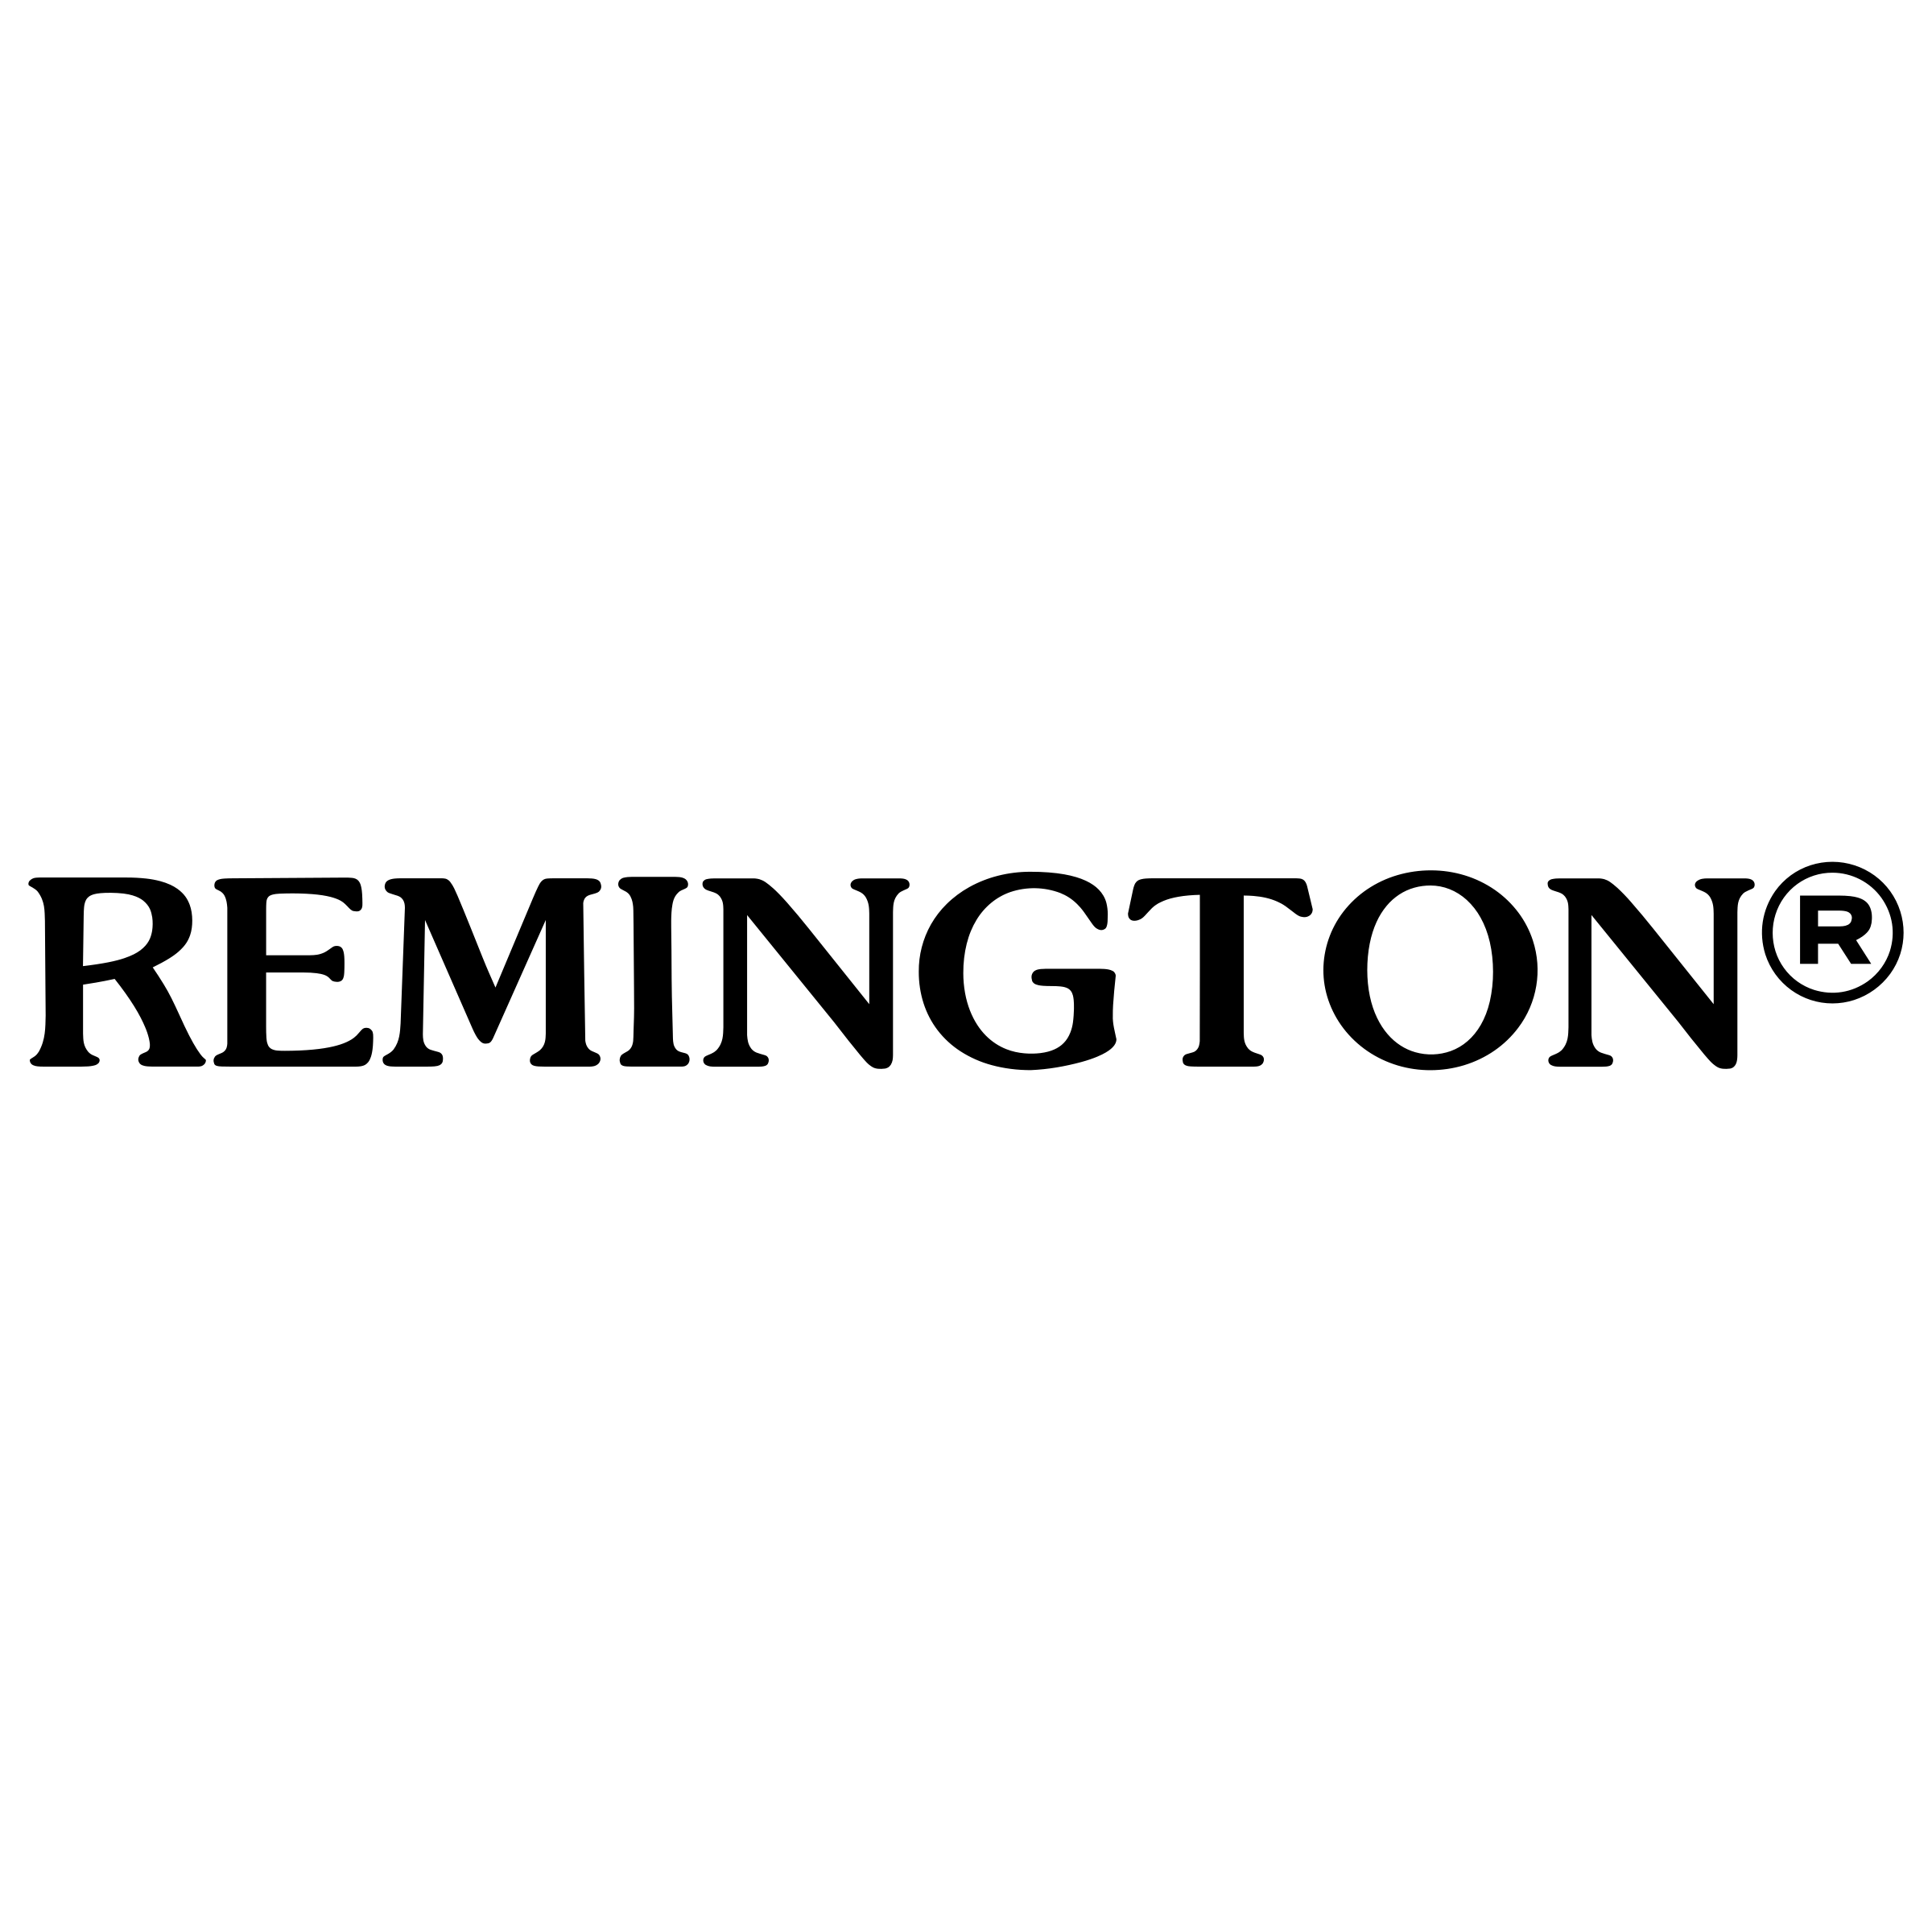 Remmington Logo - Remington Logo PNG Transparent & SVG Vector